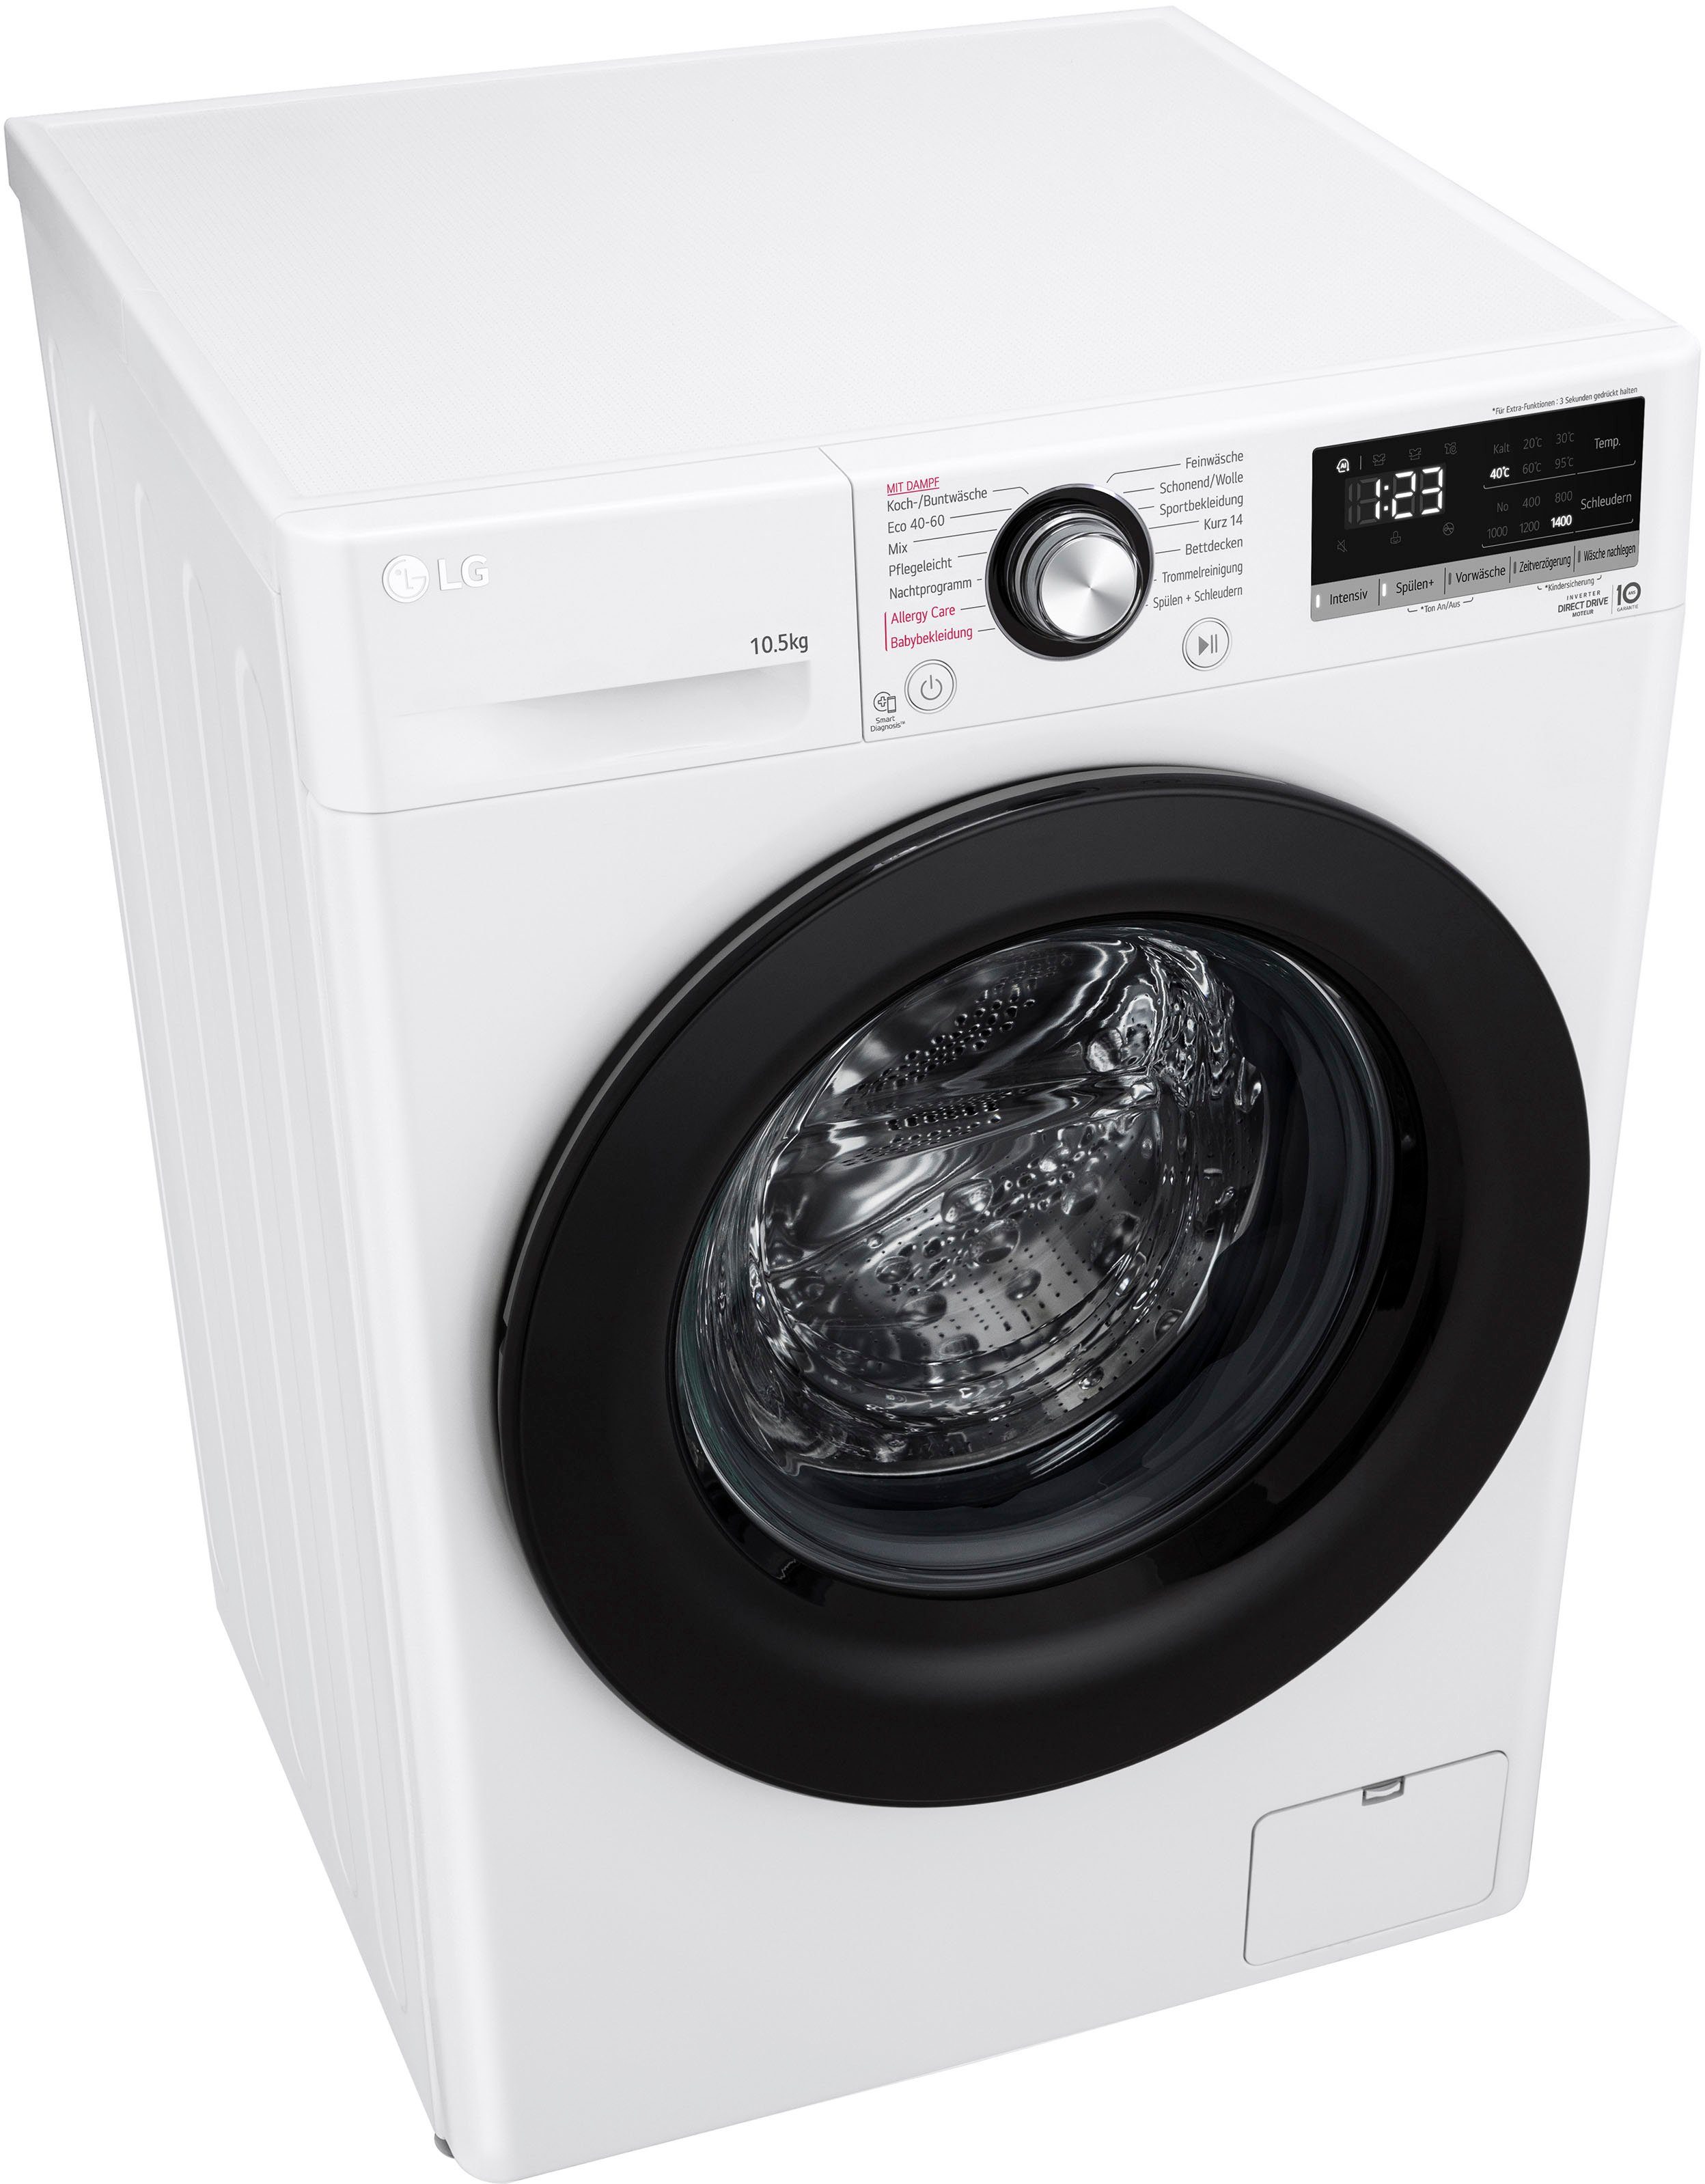 LG Waschmaschine F4WV40X5, 10,5 U/min 1400 kg